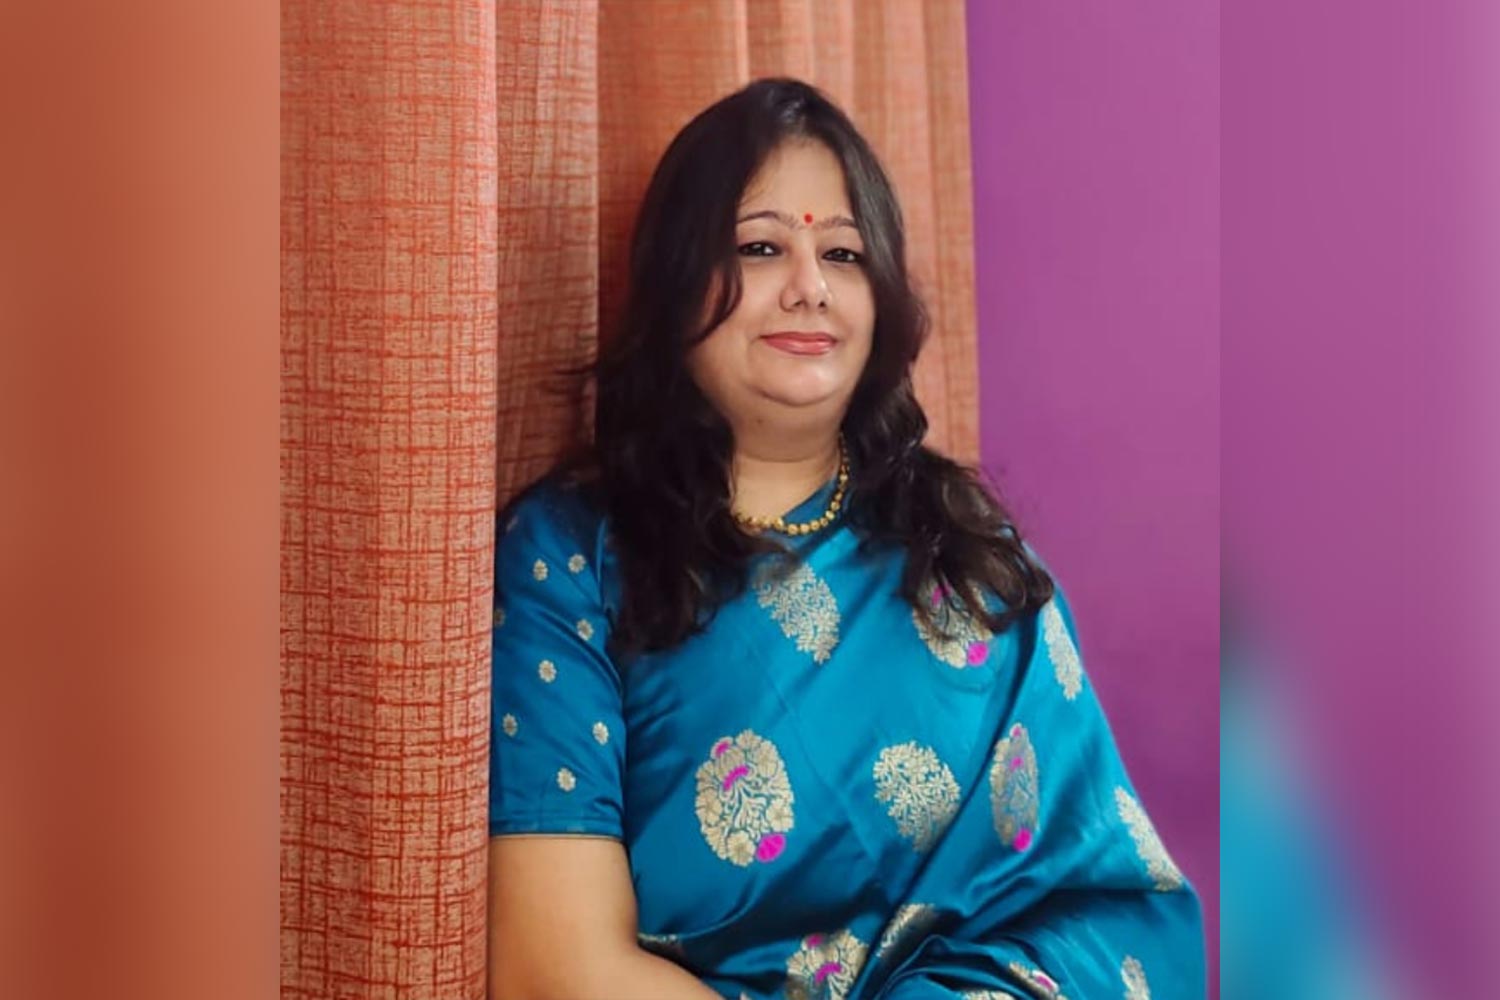 Ms. Subhasree Mukherjee